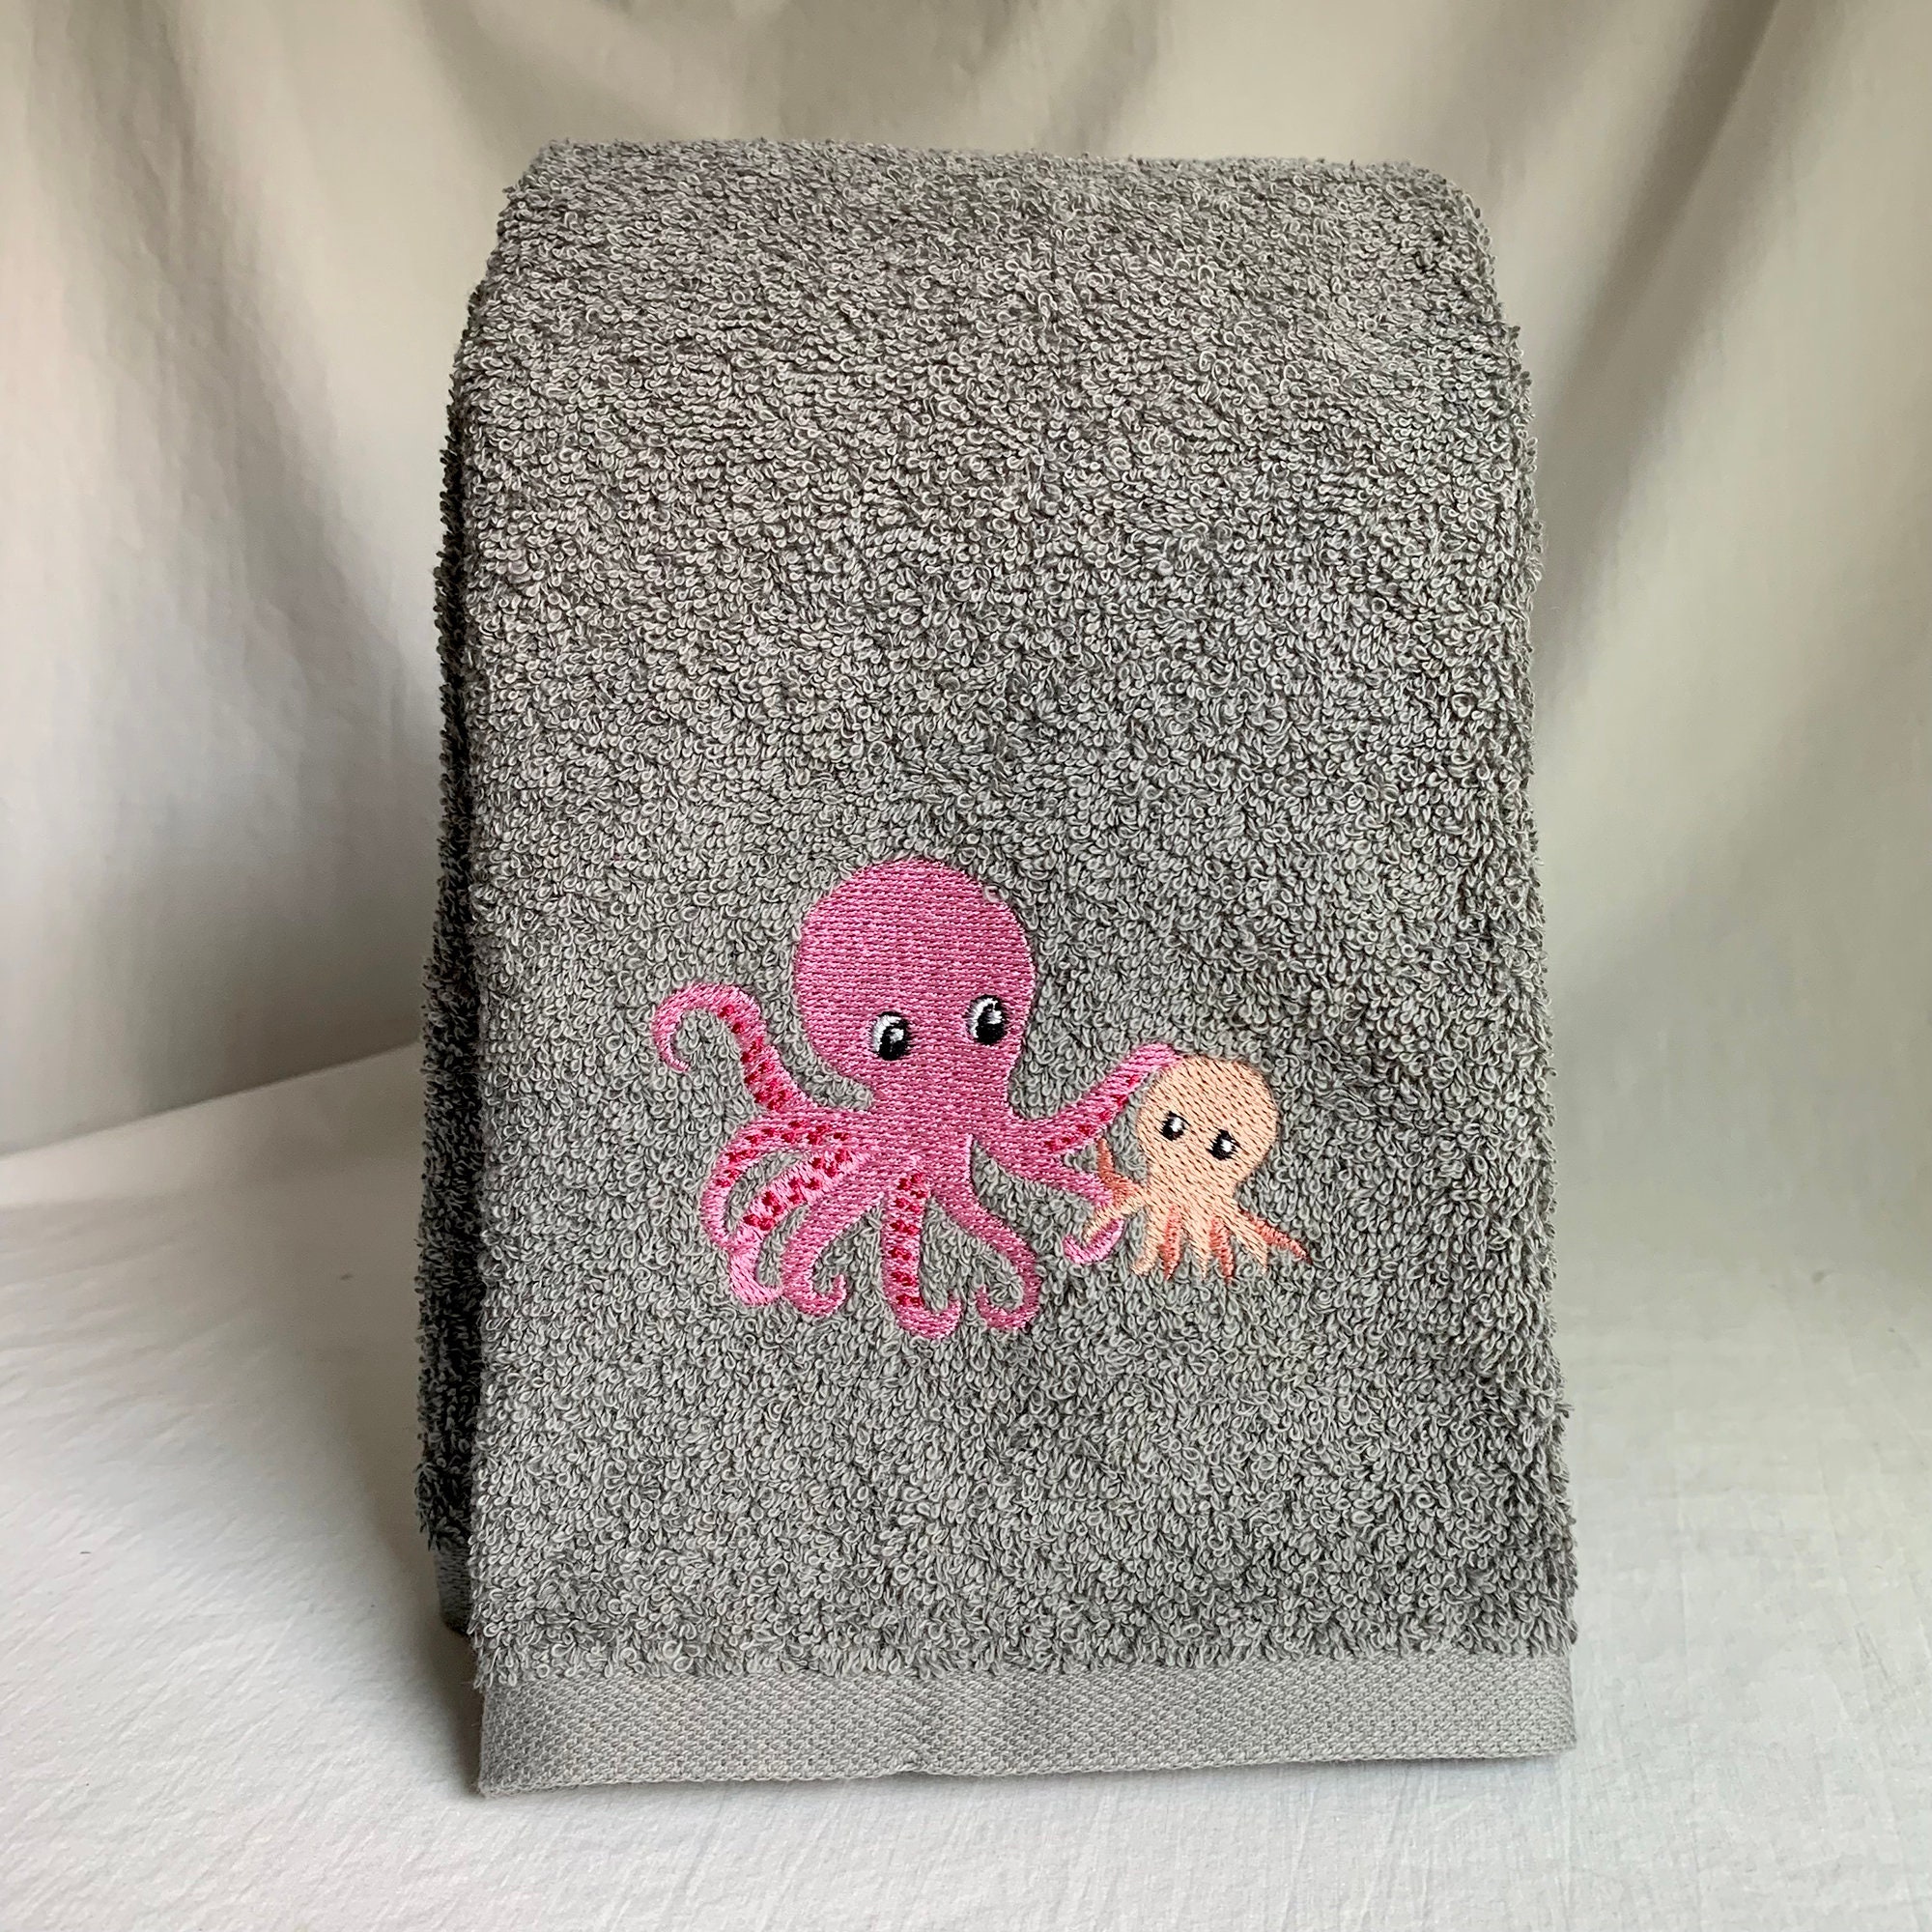 Octo Bar - Octopus Bartender Hand & Bath Towel